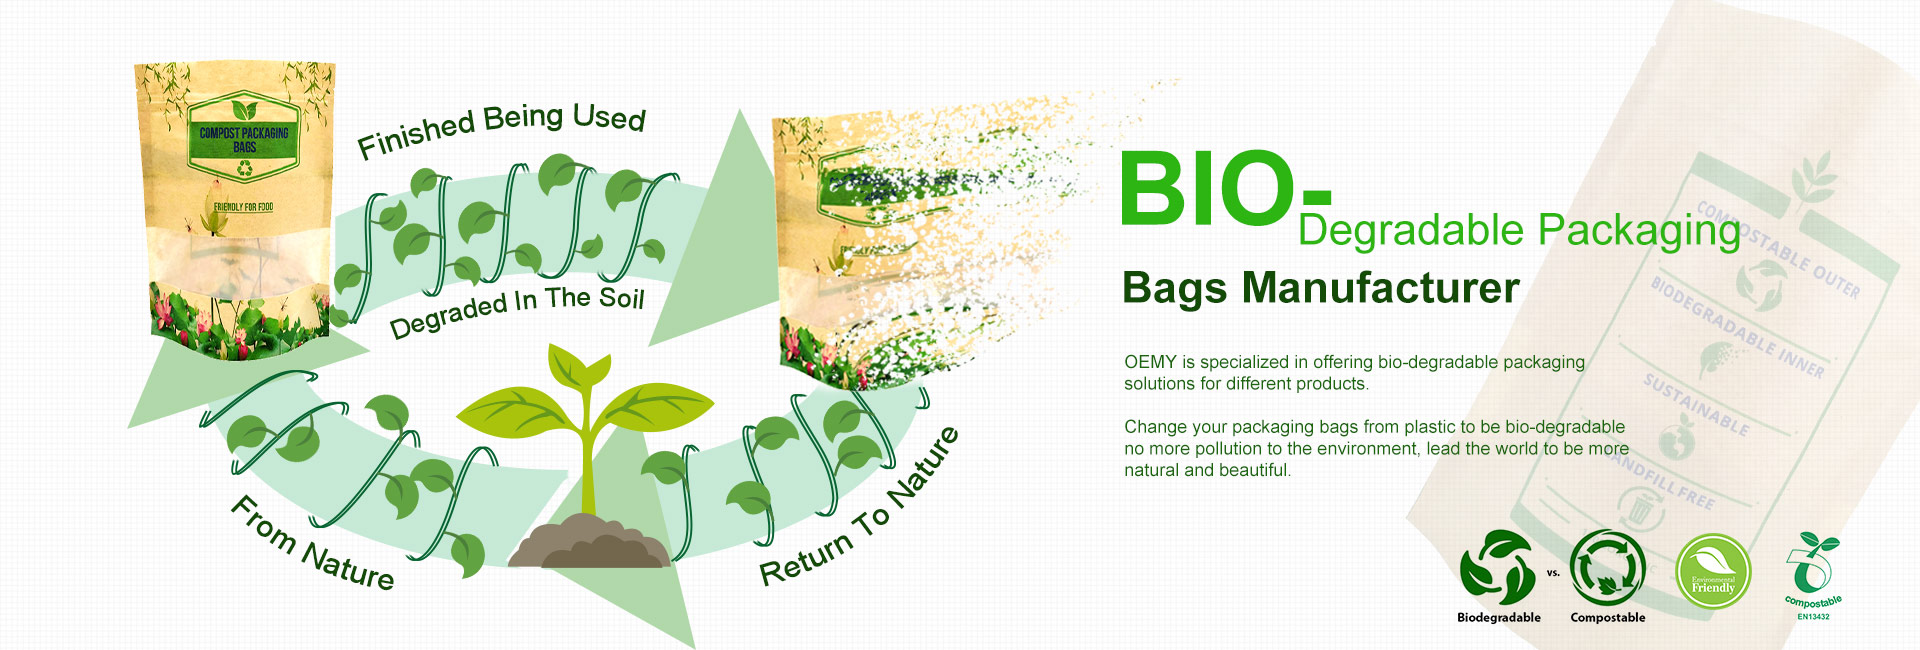 Kupaka kwa Bio-Degradable Packaging